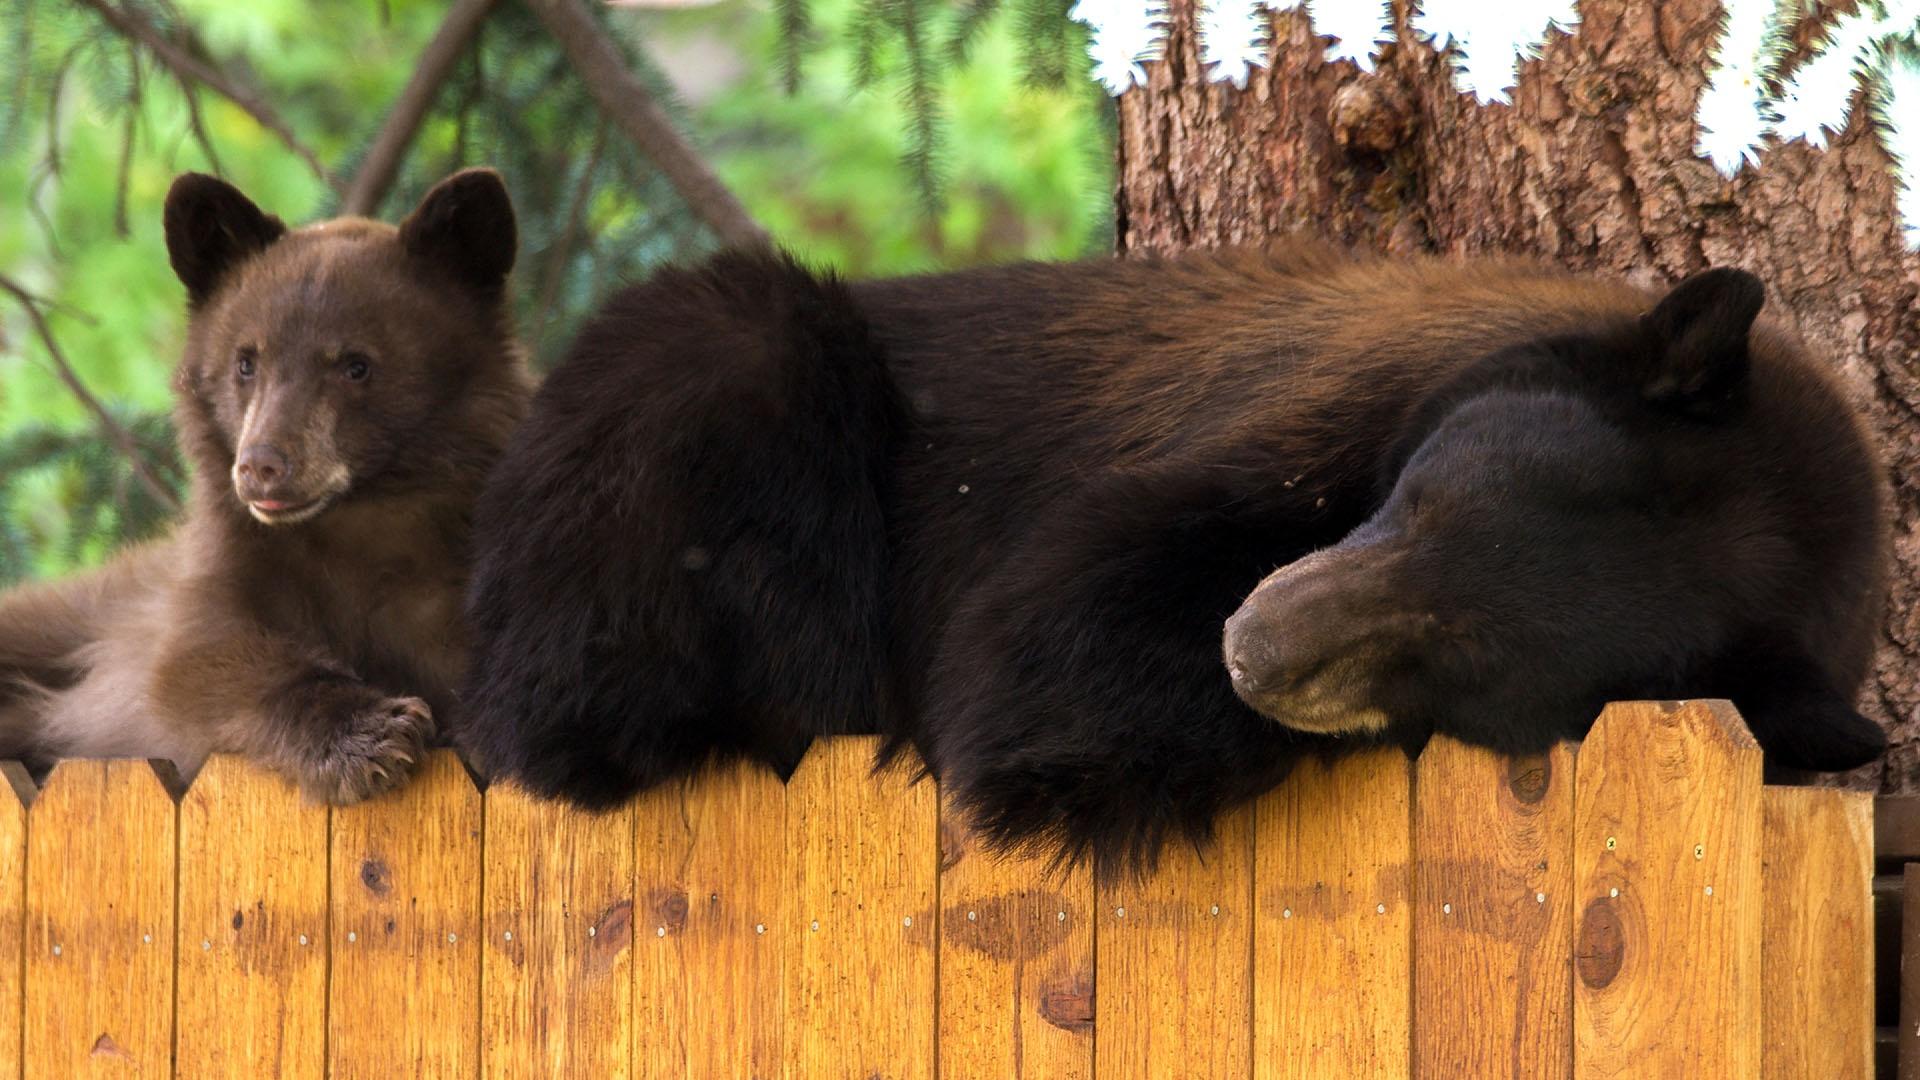 Closeup image of bears on fence